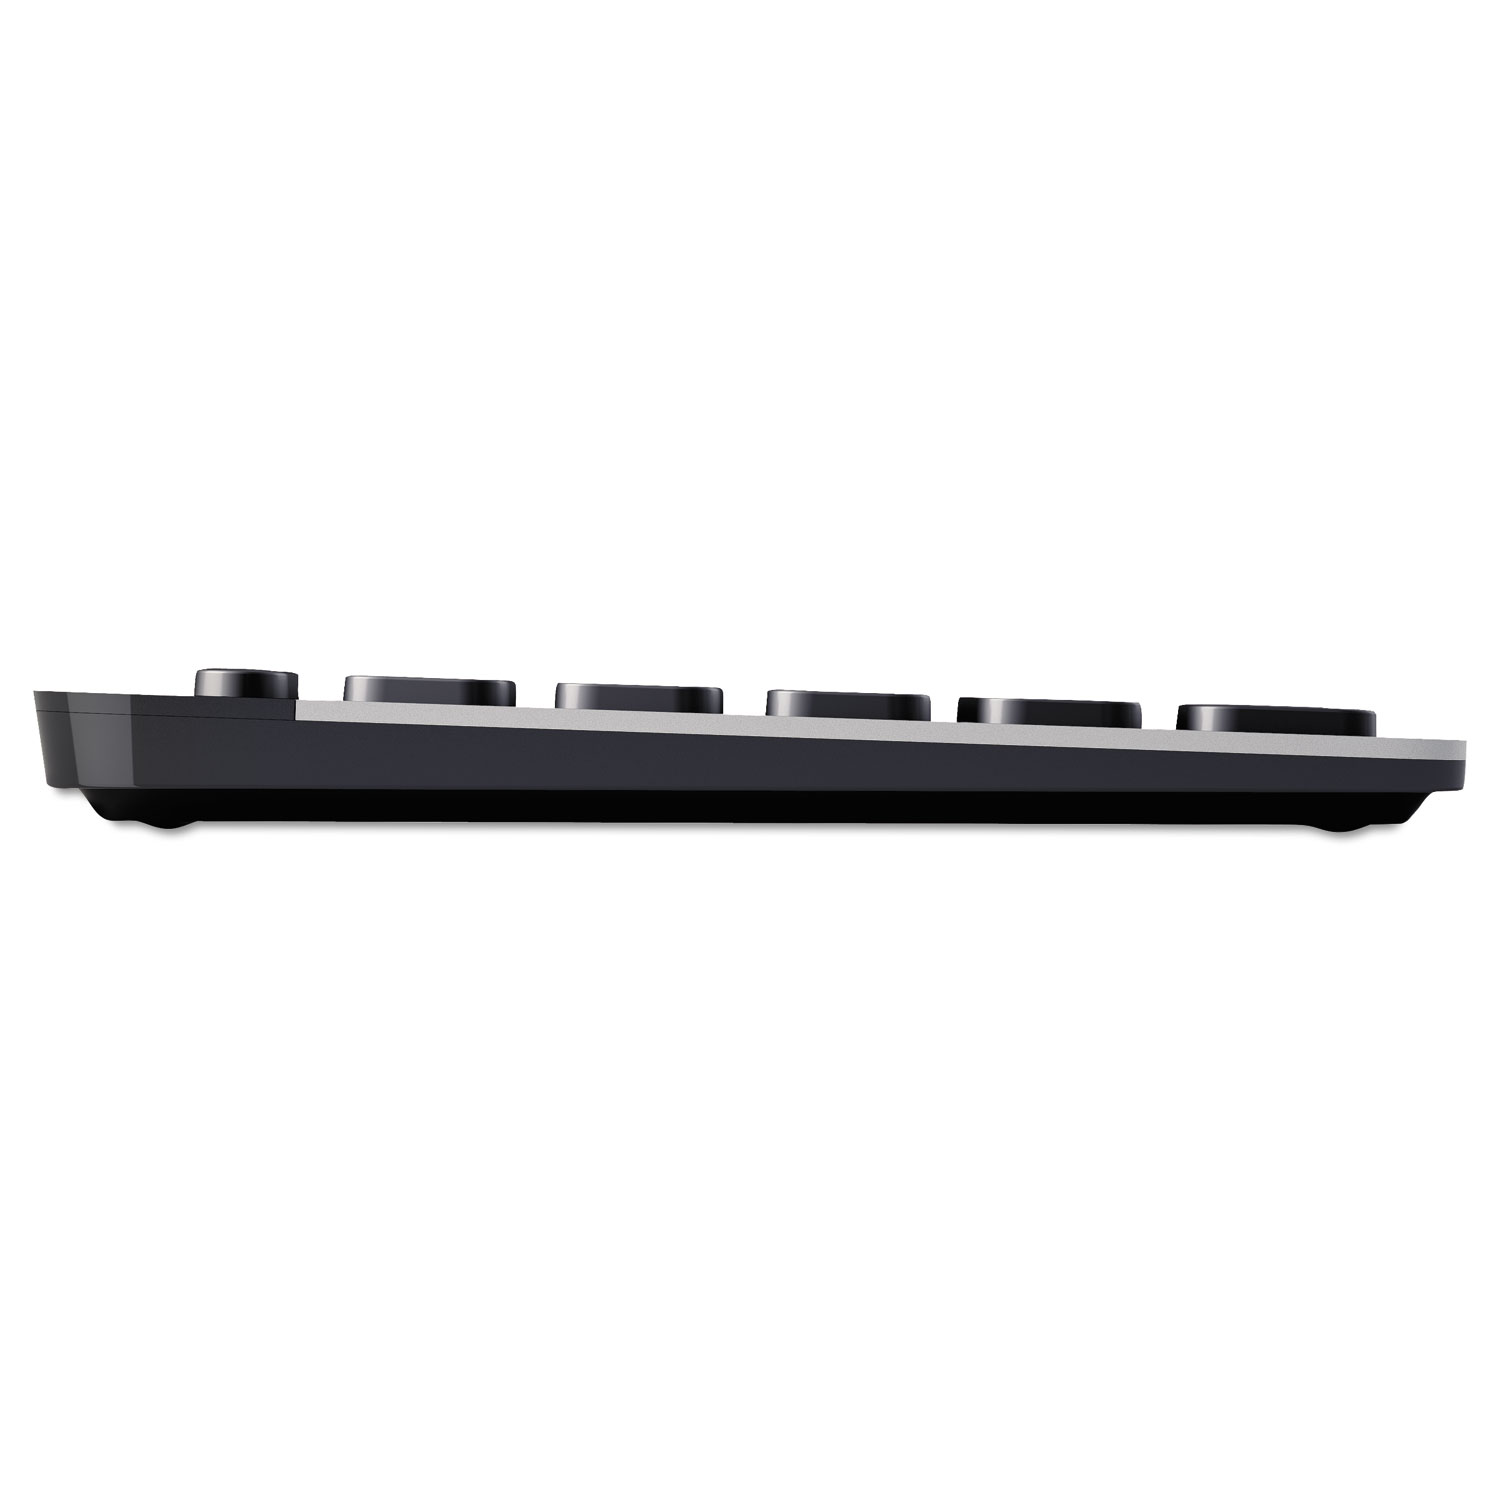 Bluetooth Illuminated Keyboard for Mac/iPhone/iPad, Black